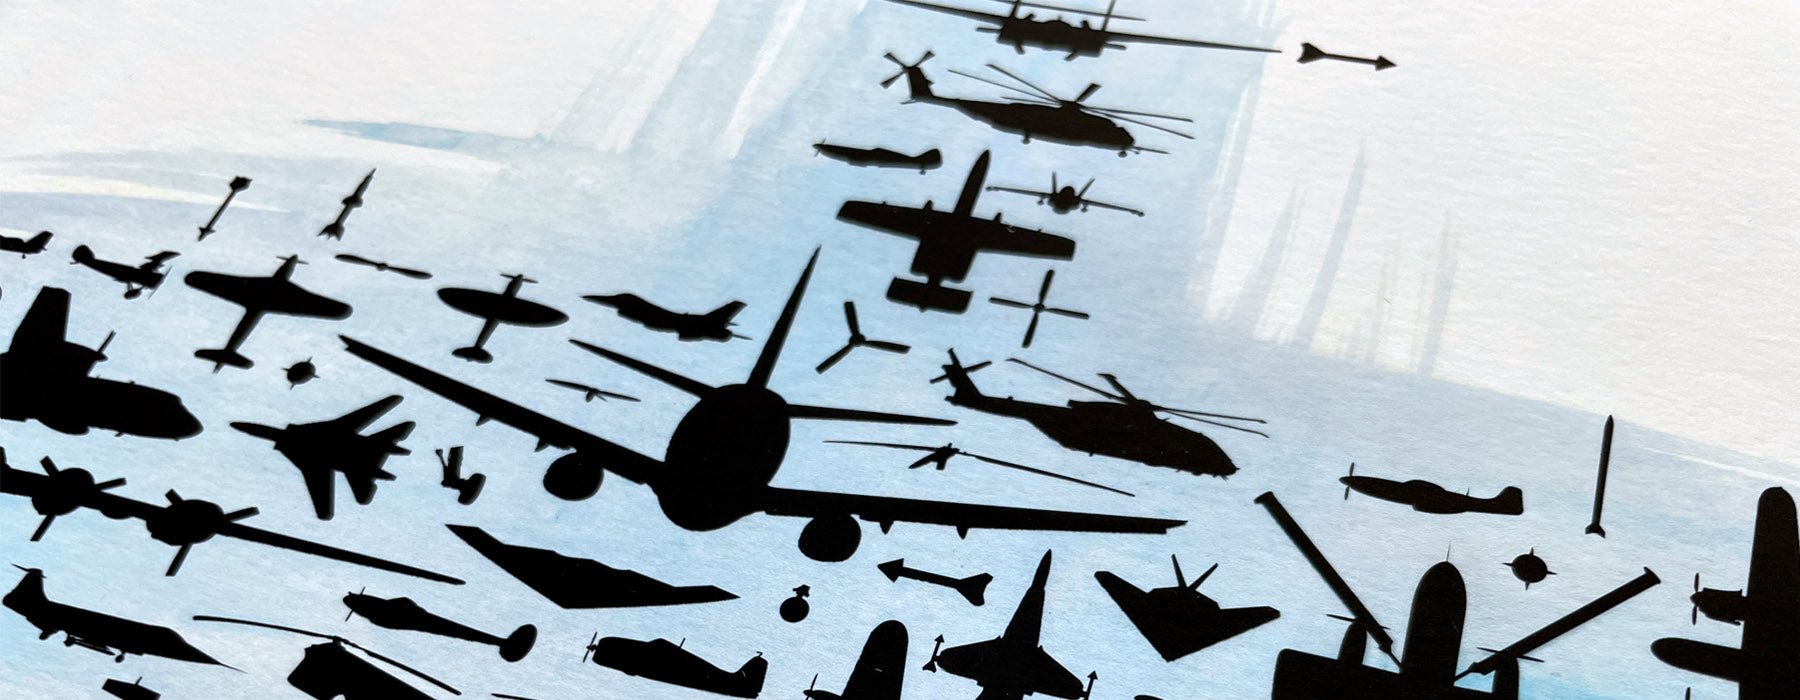 Aviation Prints